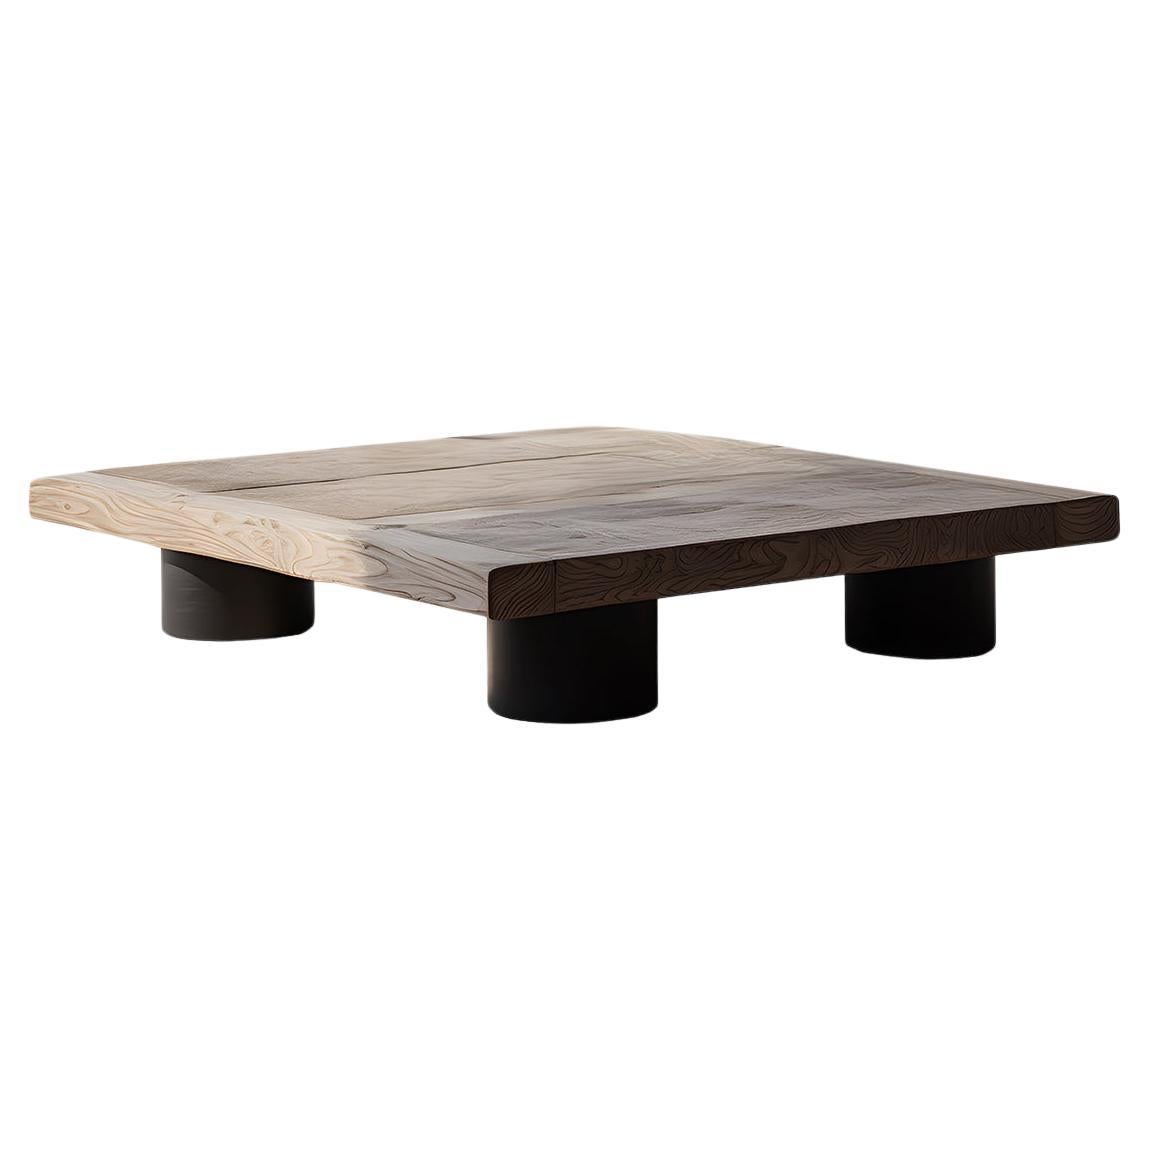 Bold Square Coffee Table in Black Tint - Architectural Fundamenta 29 by NONO For Sale